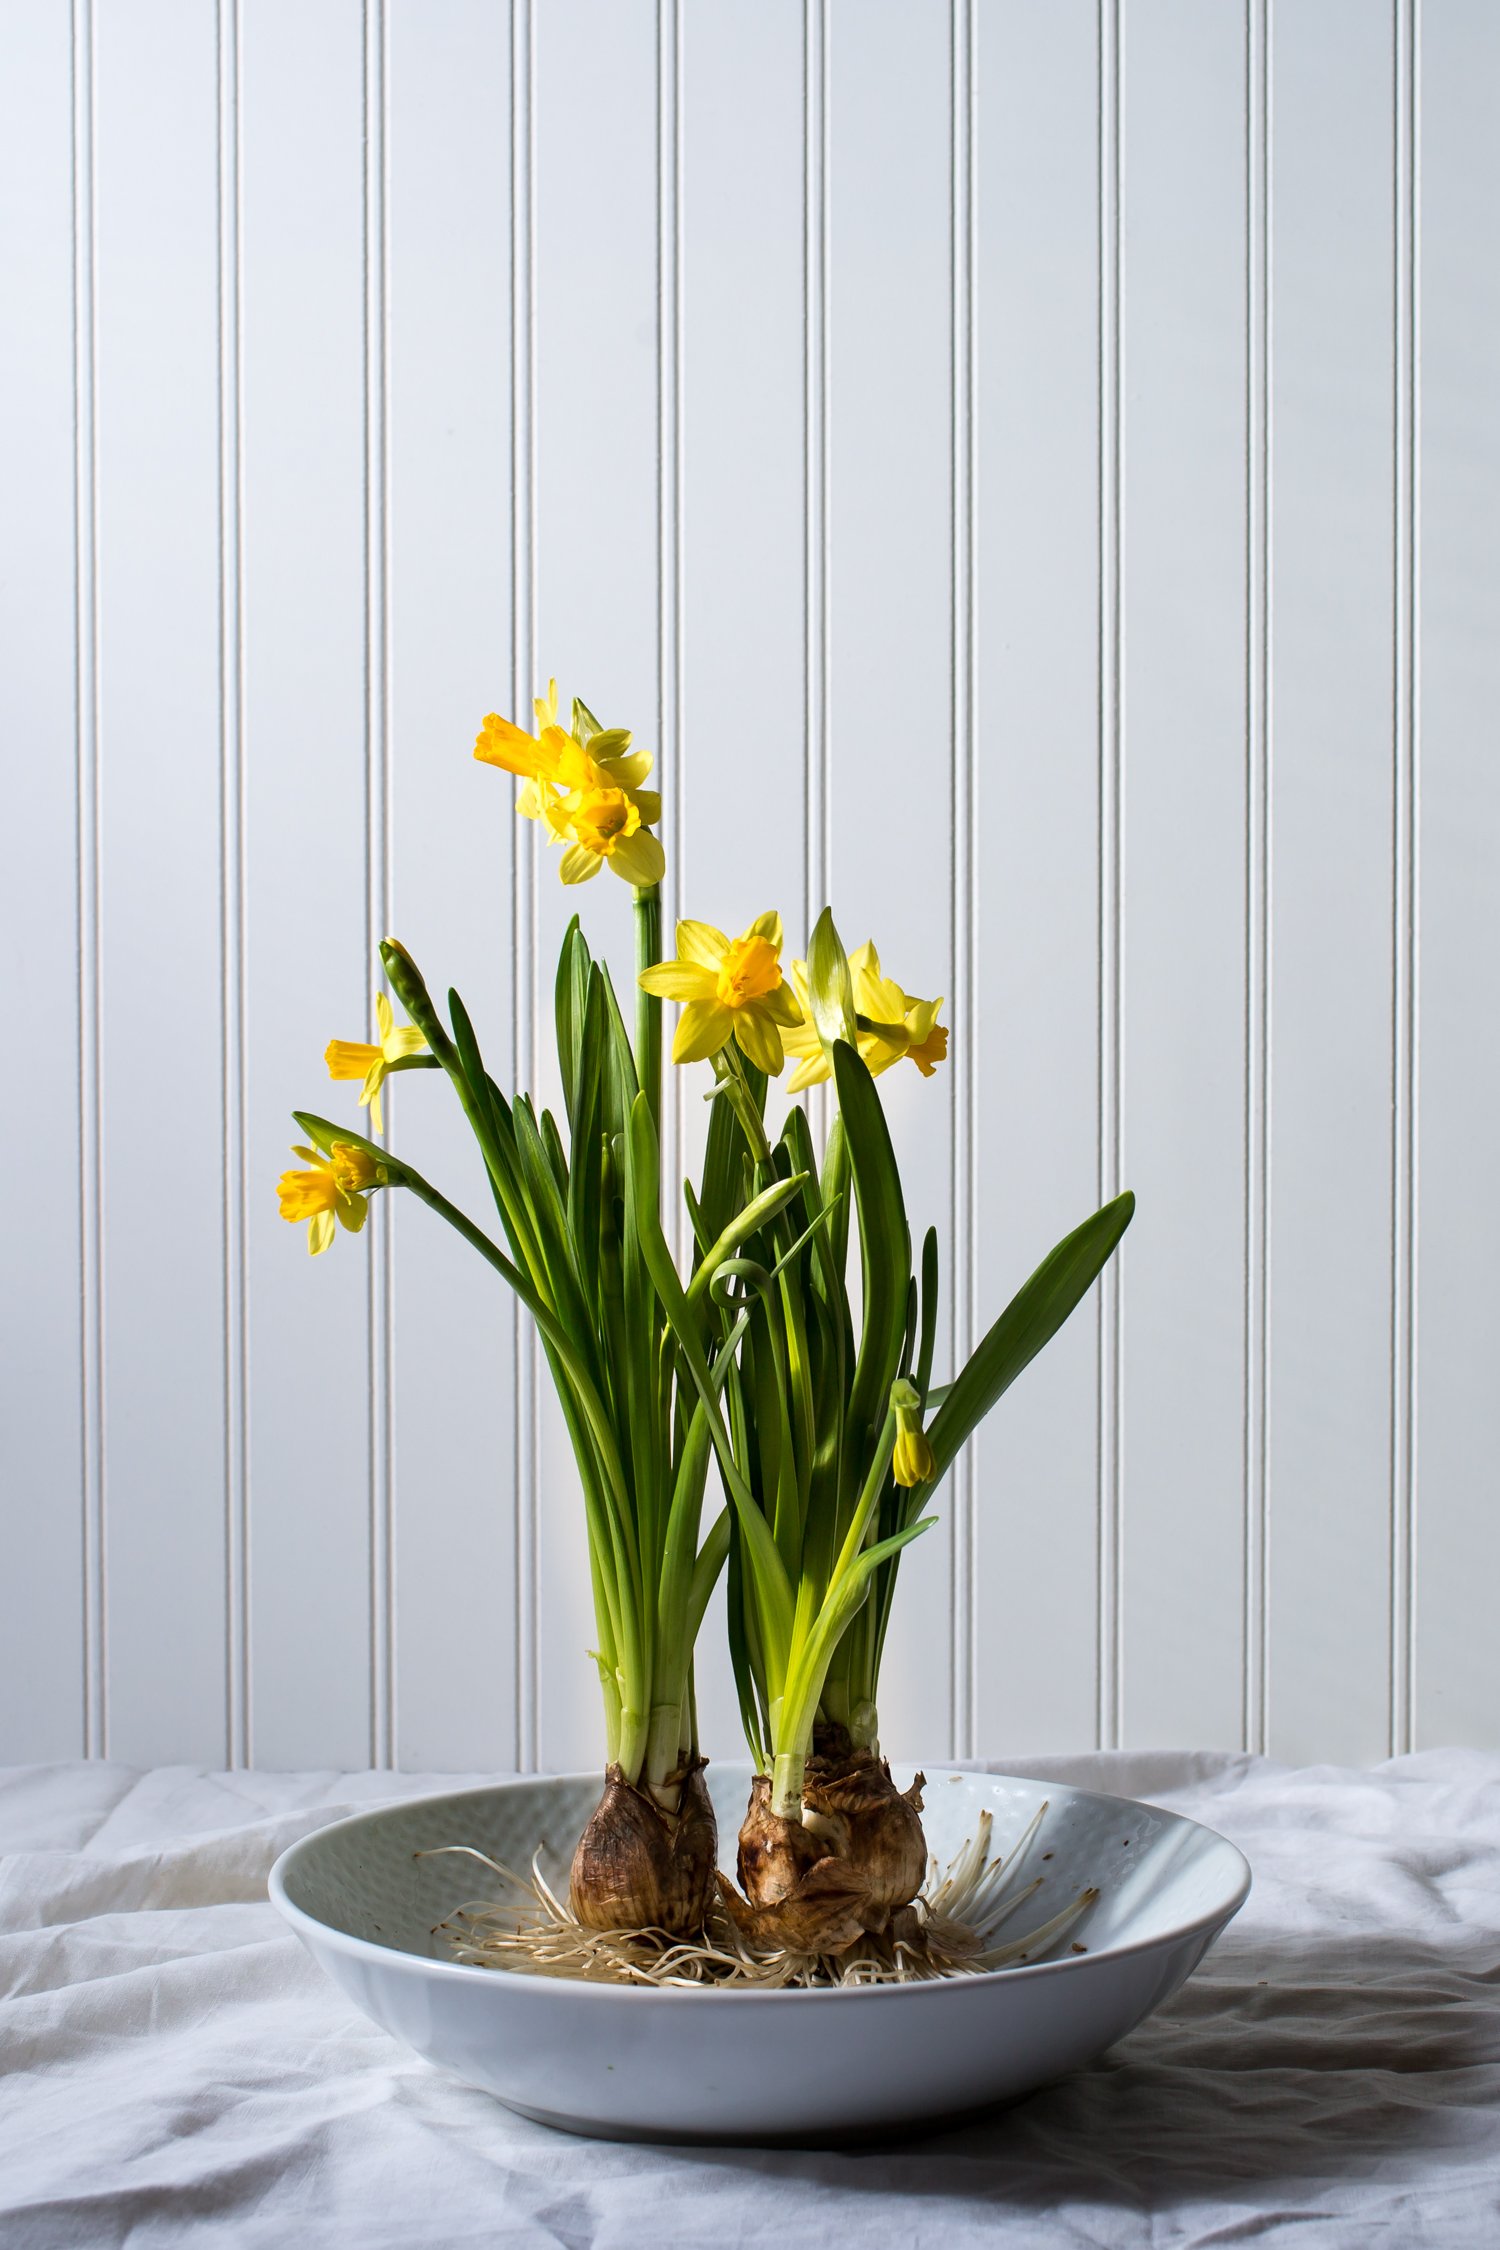 220331_Daffodils-155-3.jpg